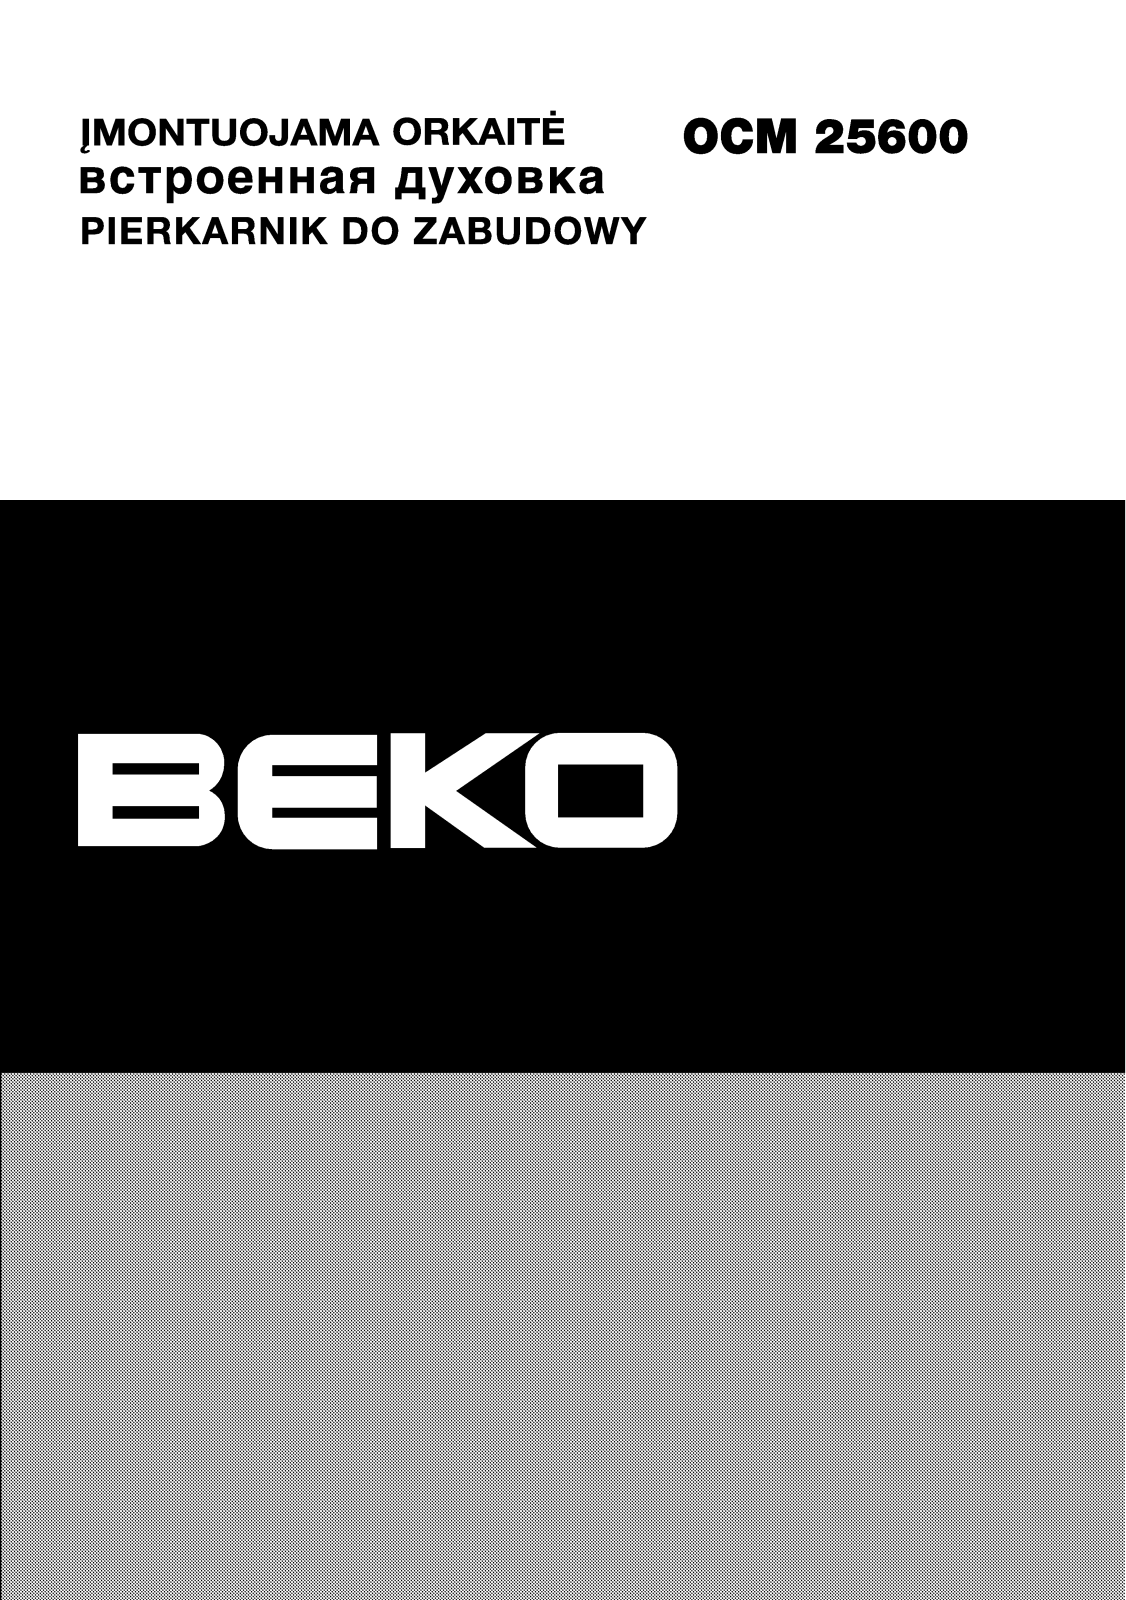 Beko OCM 25600 User Manual